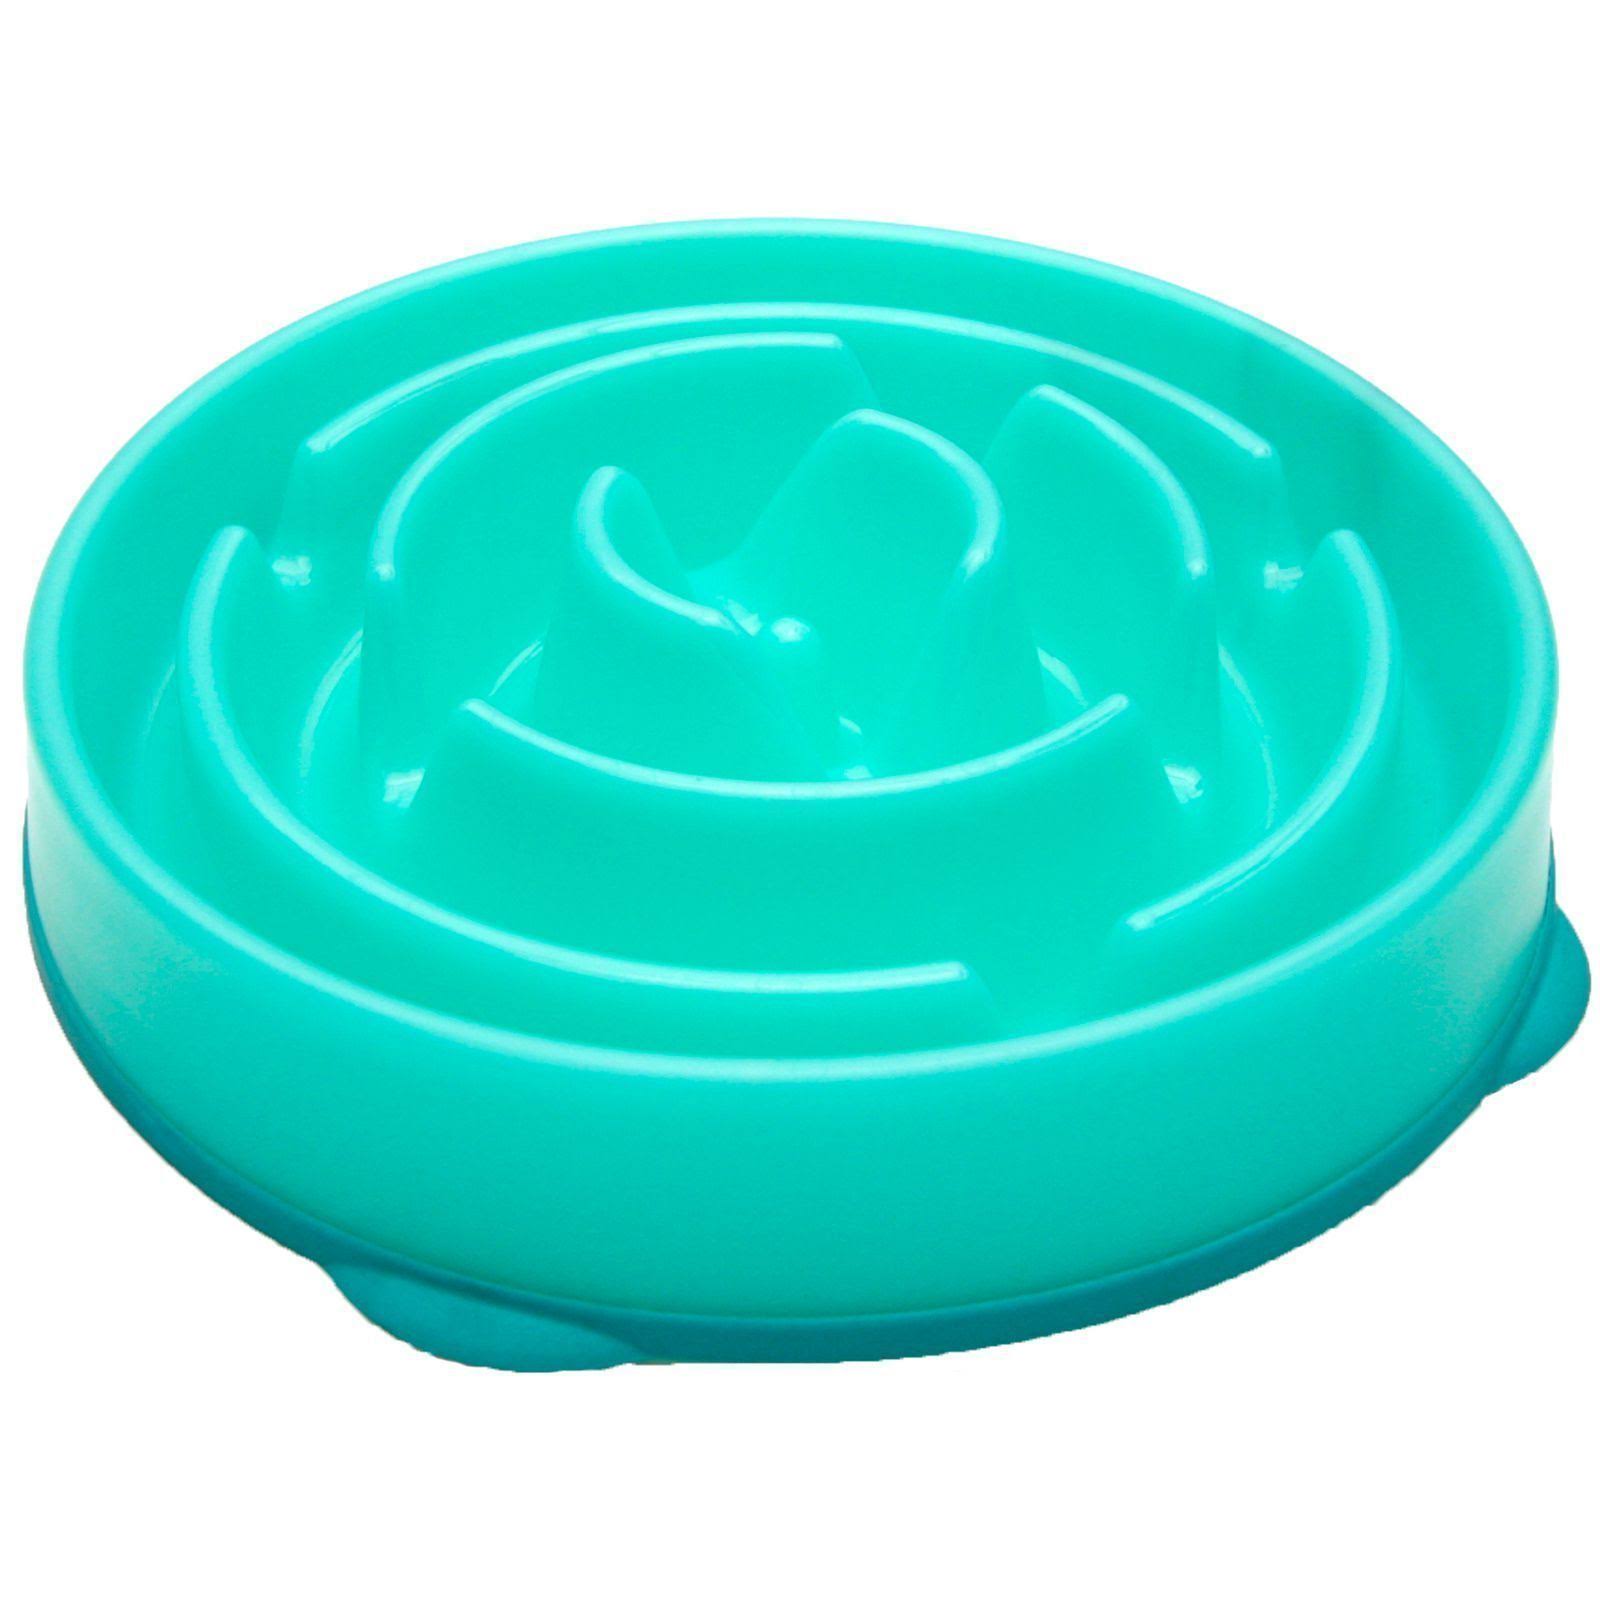 Outward Hound Kyjen 51002 Fun Feeder Slow Feed Interactive Bloat Stop Dog Bowl - Blue, Large